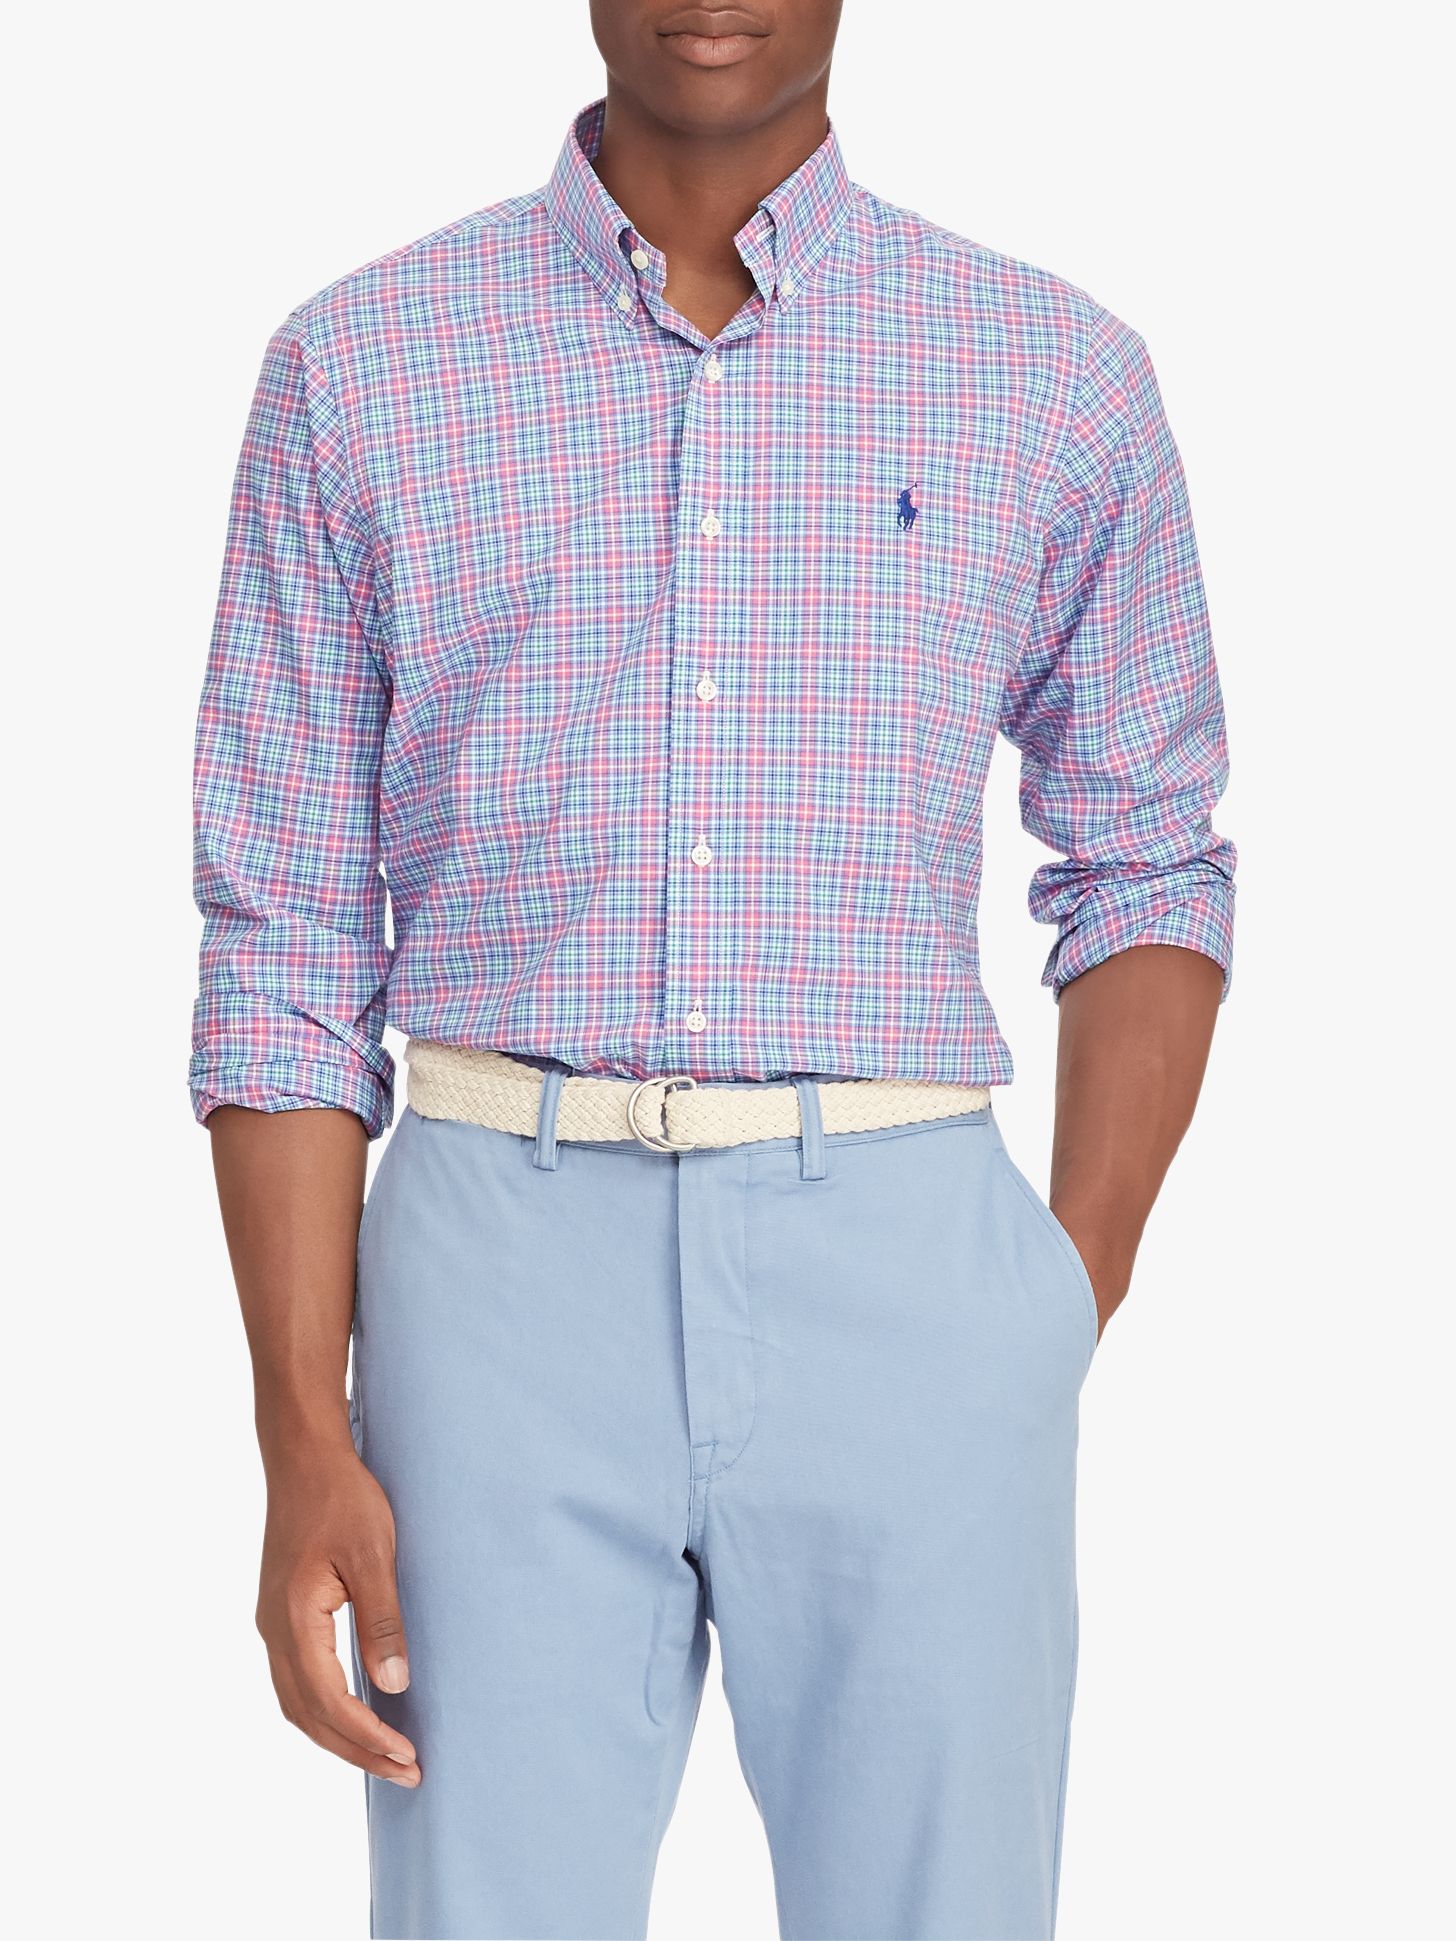 Polo Ralph Lauren Classic Fit Gingham Shirt, Coral/Powder Blue